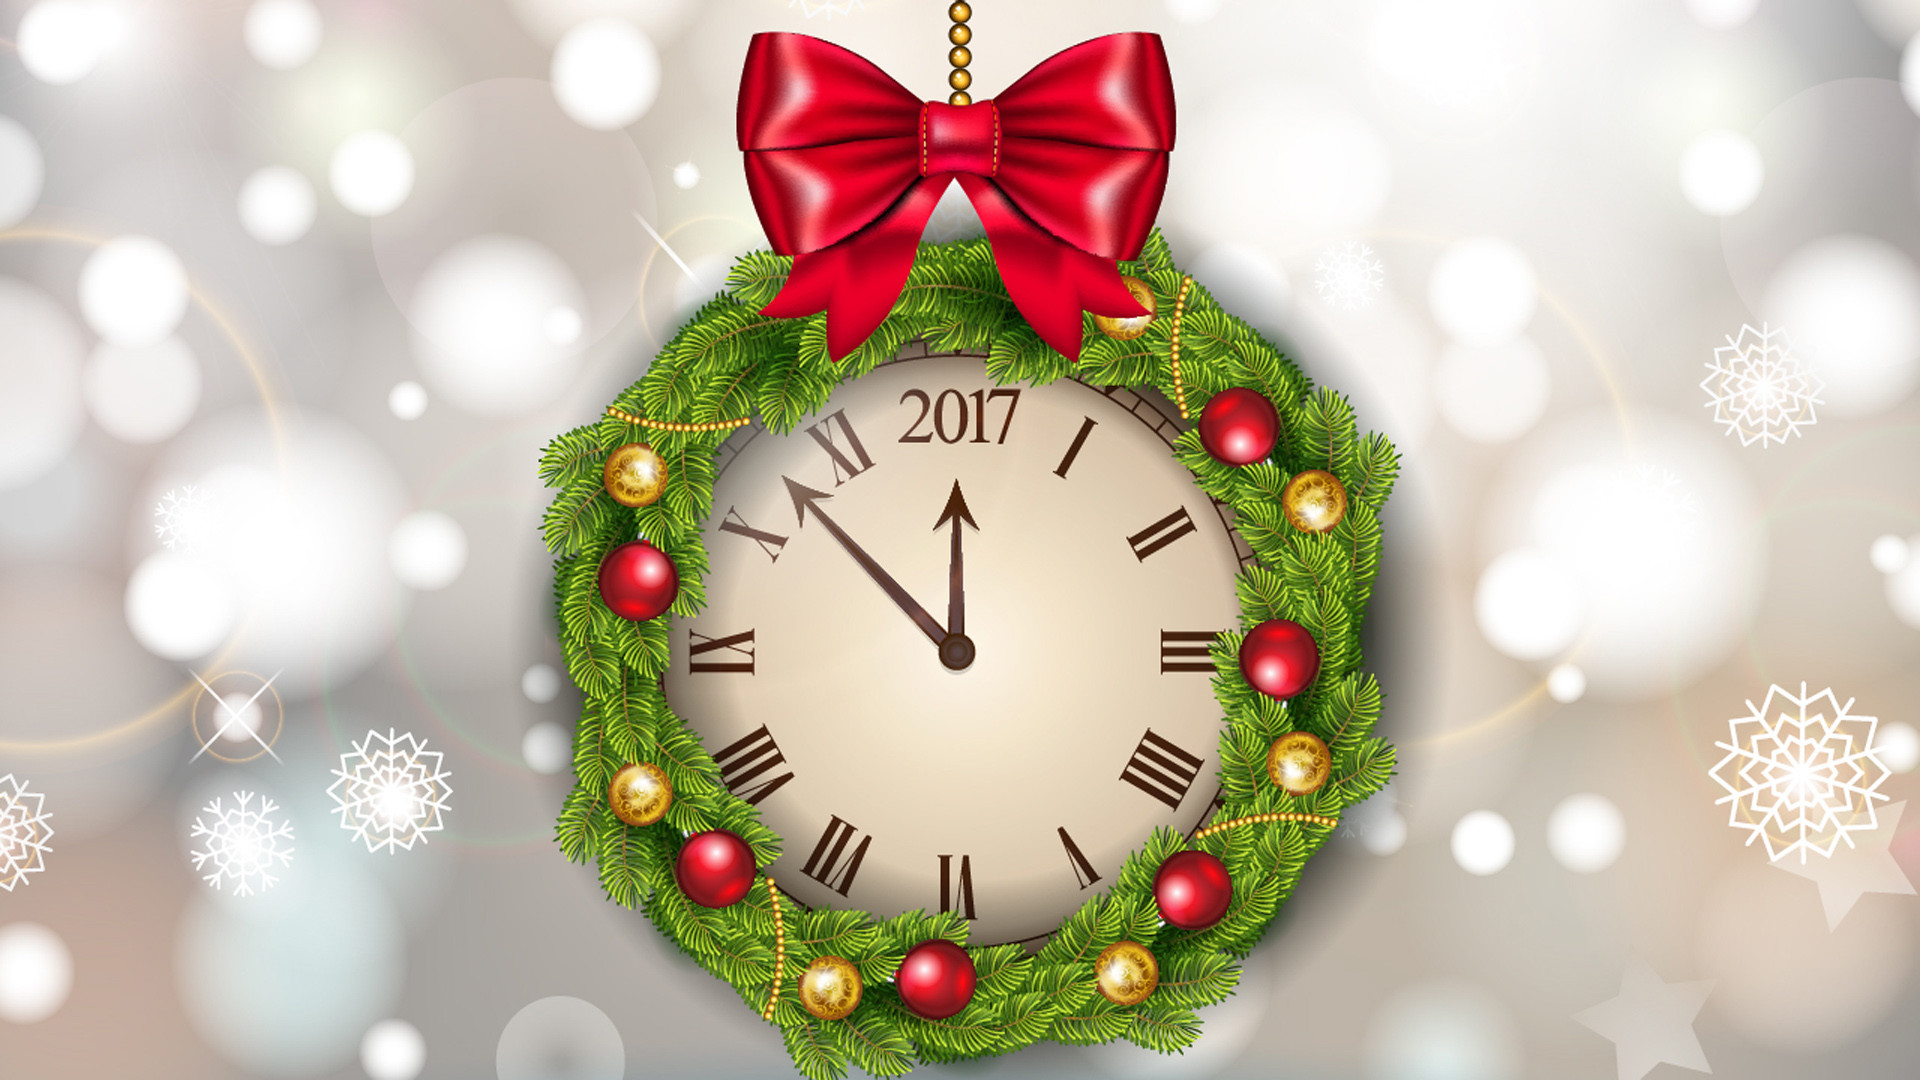 1920x1080 Holiday - New Year 2017 Holiday New Year Wreath Clock Wallpaper